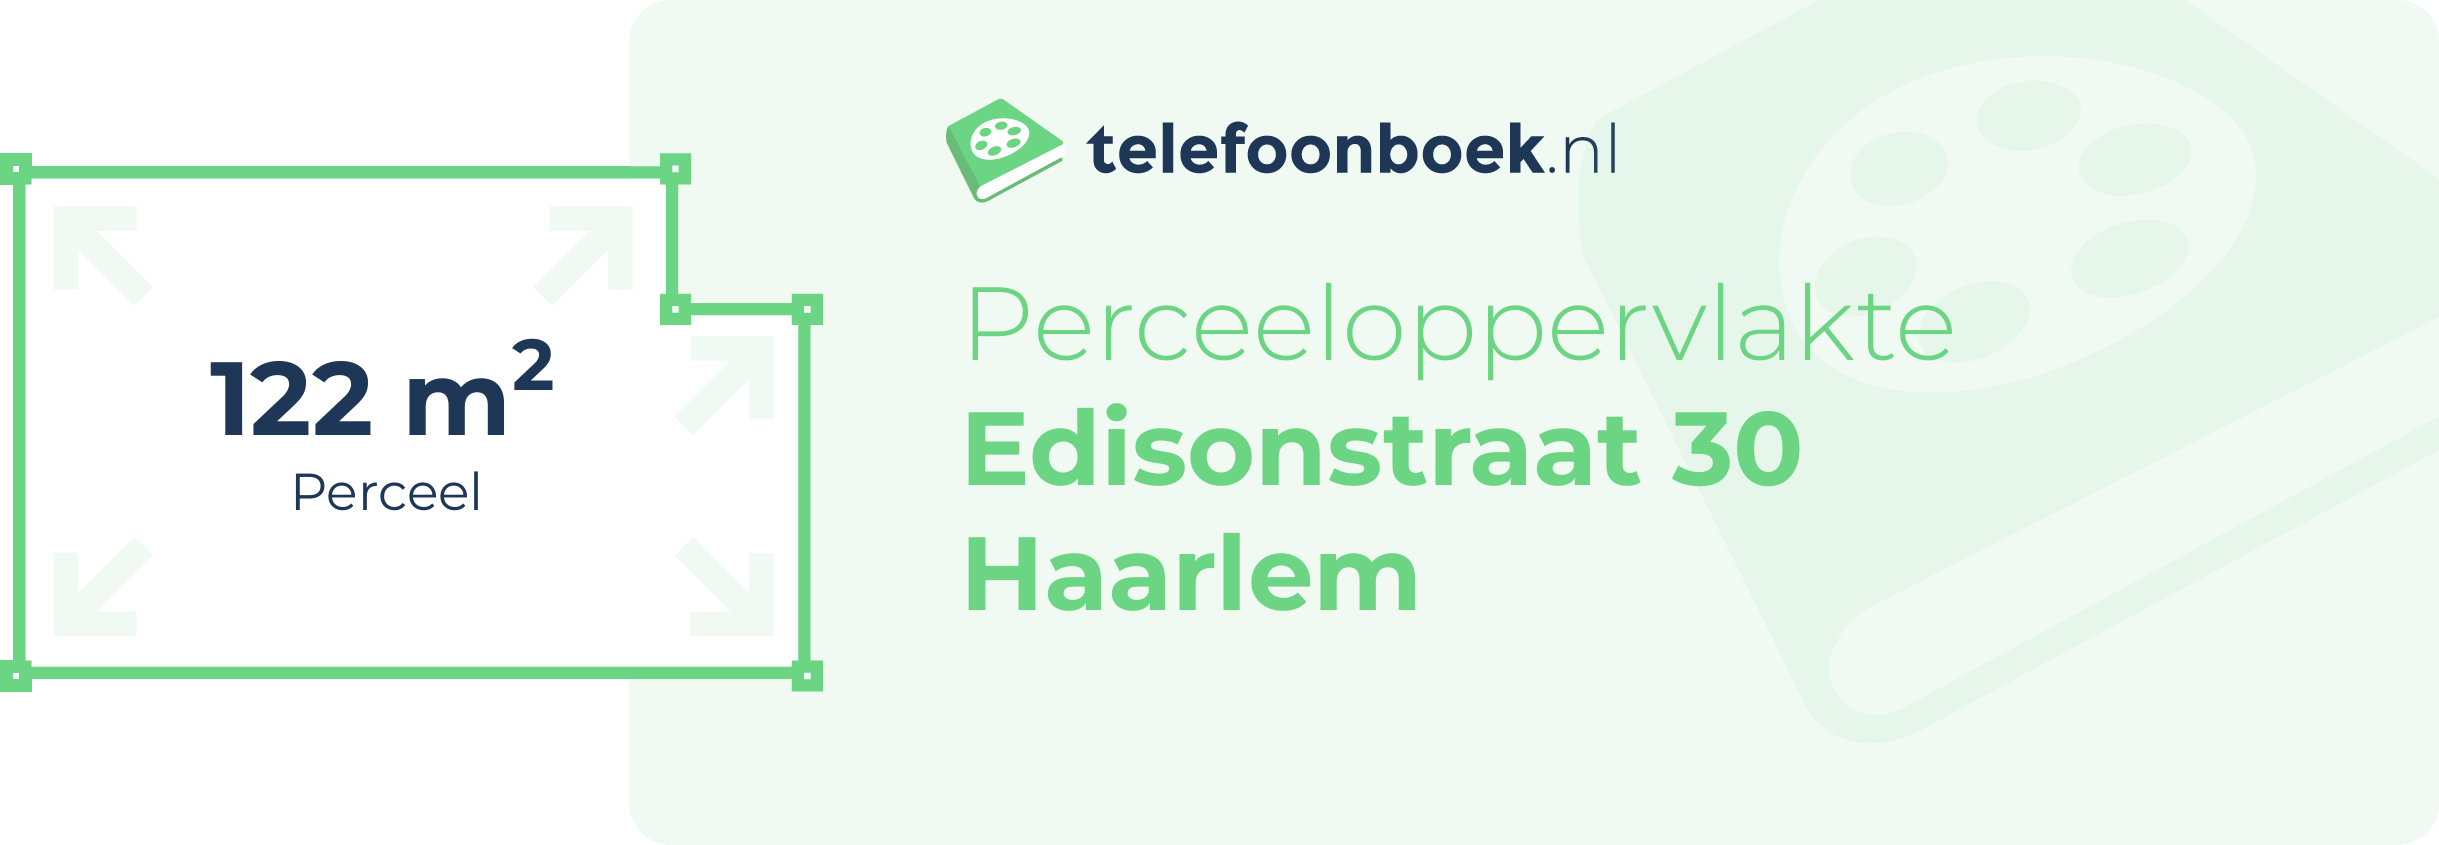 Perceeloppervlakte Edisonstraat 30 Haarlem